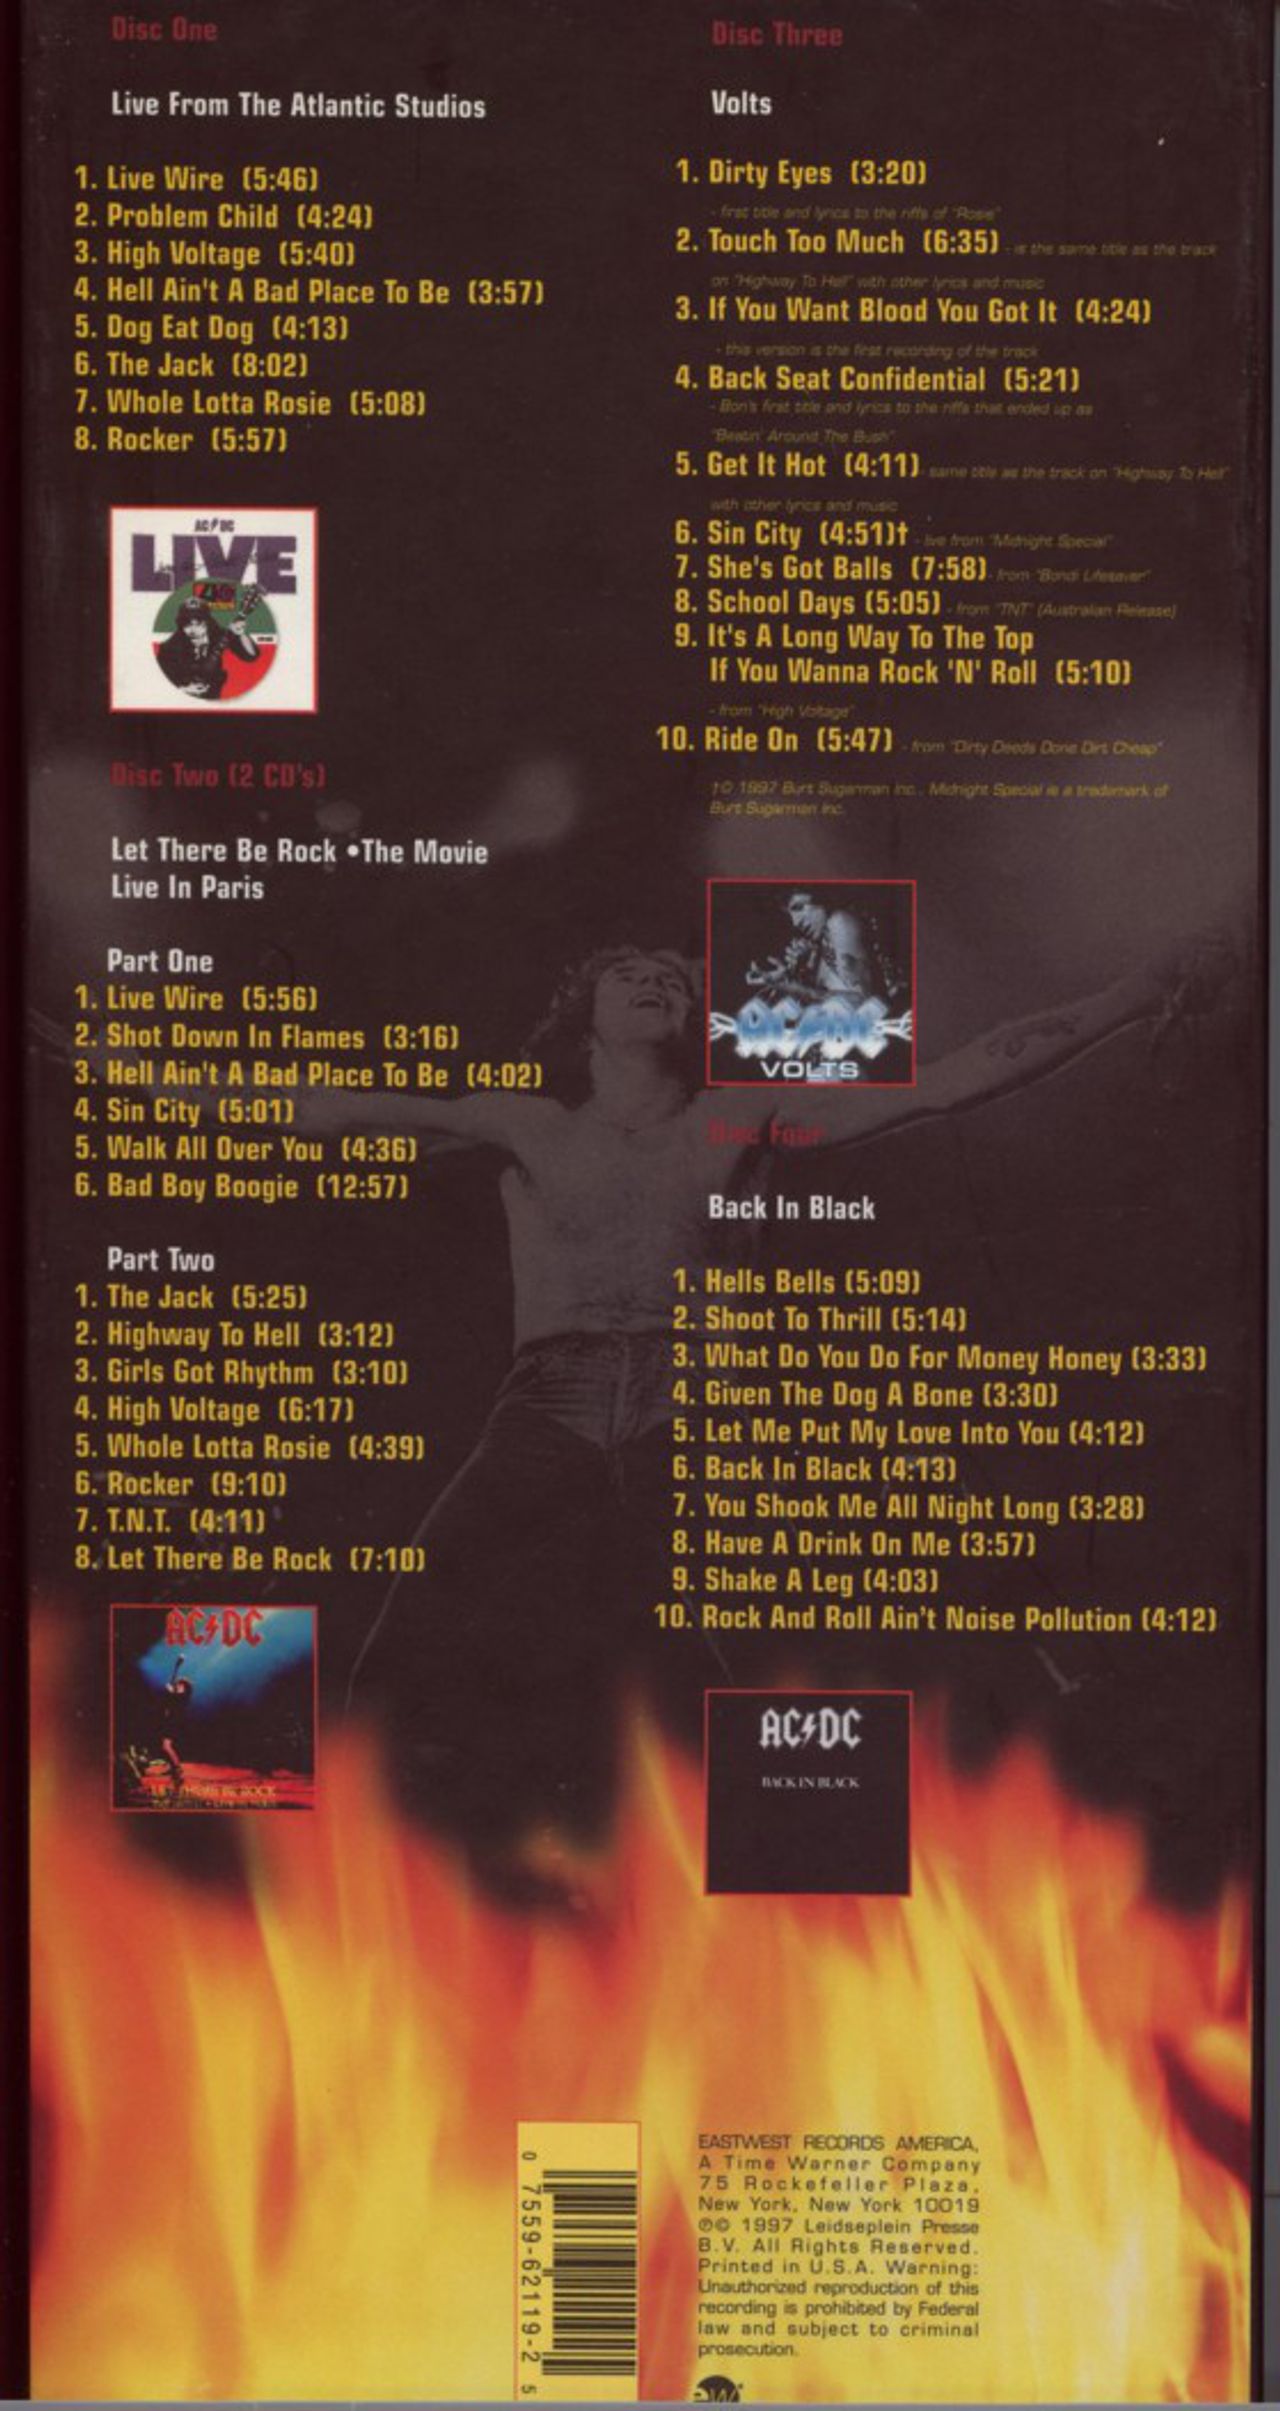 AC/DC Bonfire - 5 Box Cd album box set RareVinyl.com